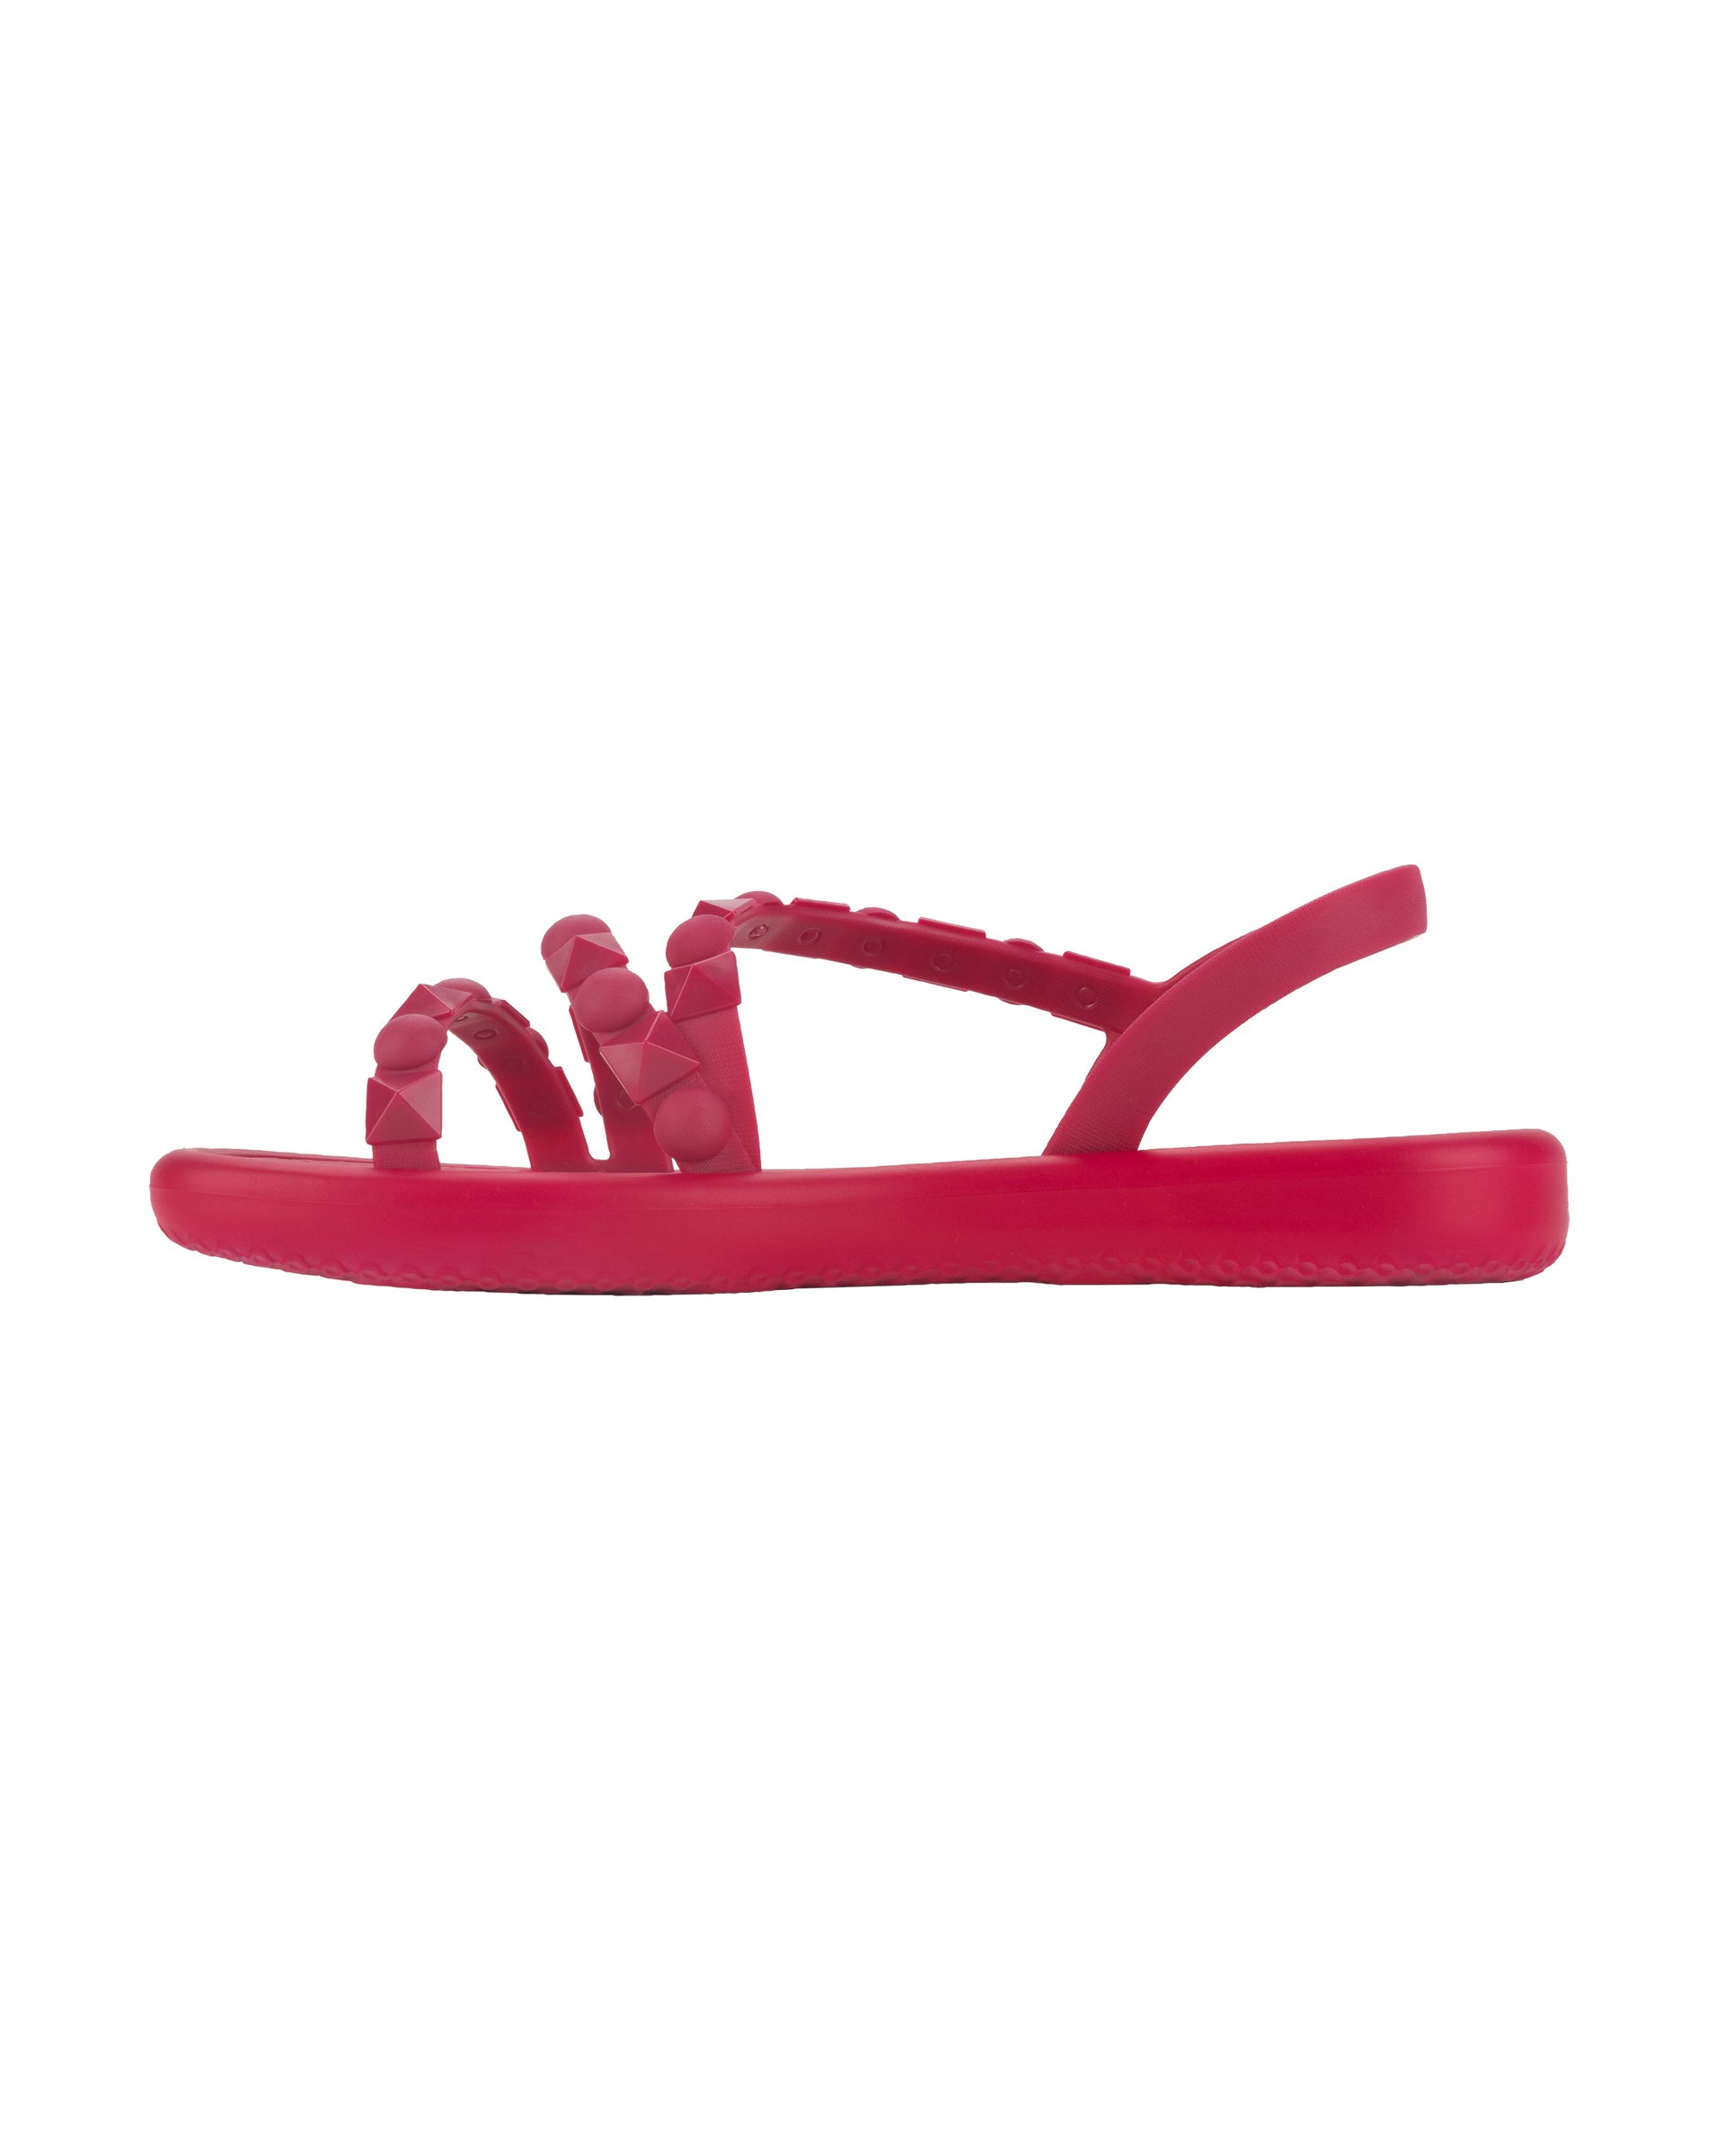 Side view of a dark pink woman's Ipanema Meu Sol flatform sandal.